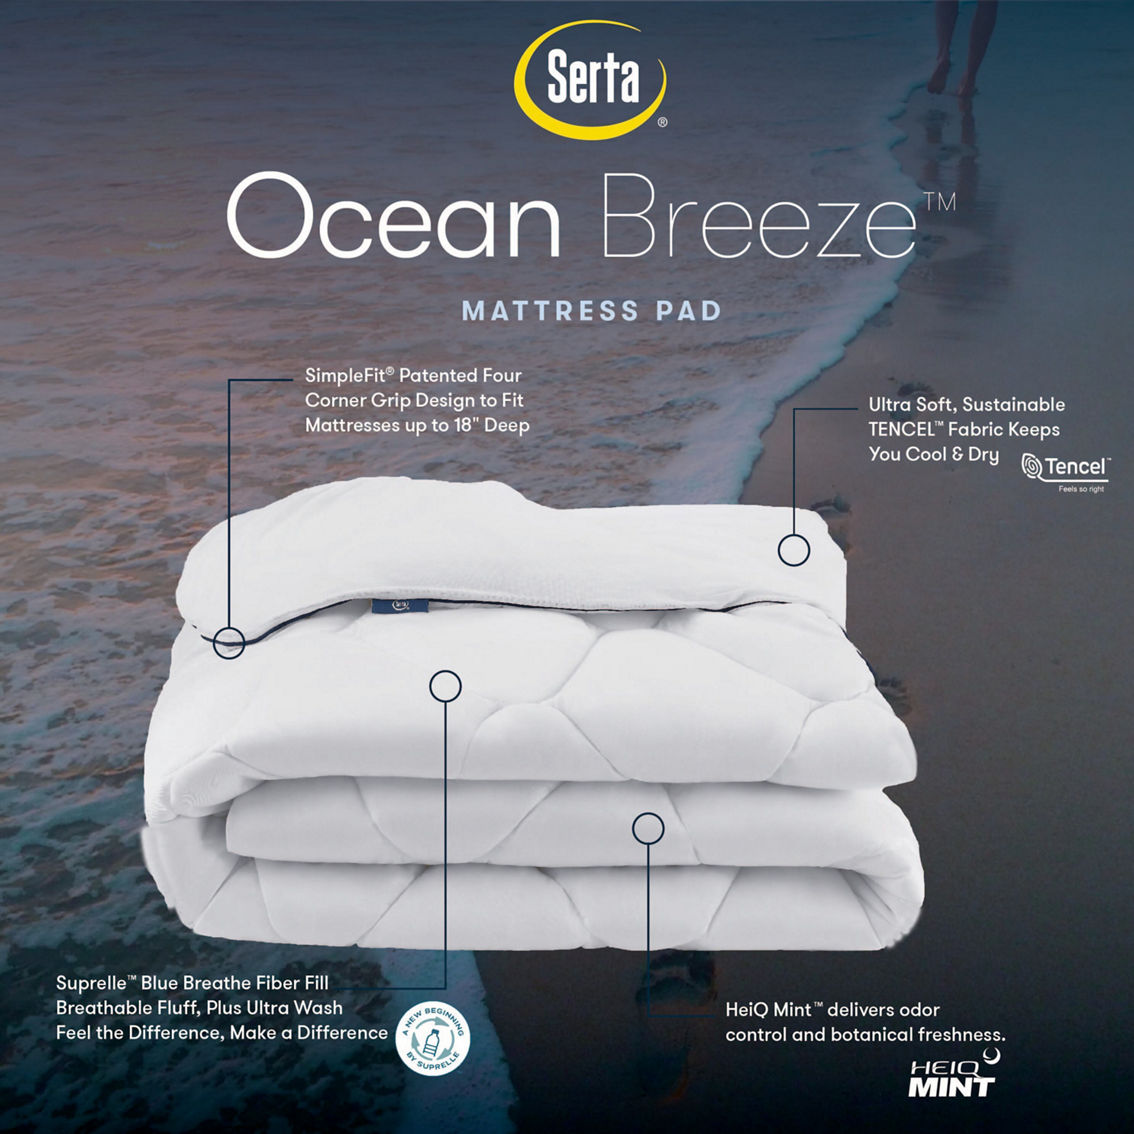 Serta Ocean Breeze Mattress Pad - Image 6 of 6